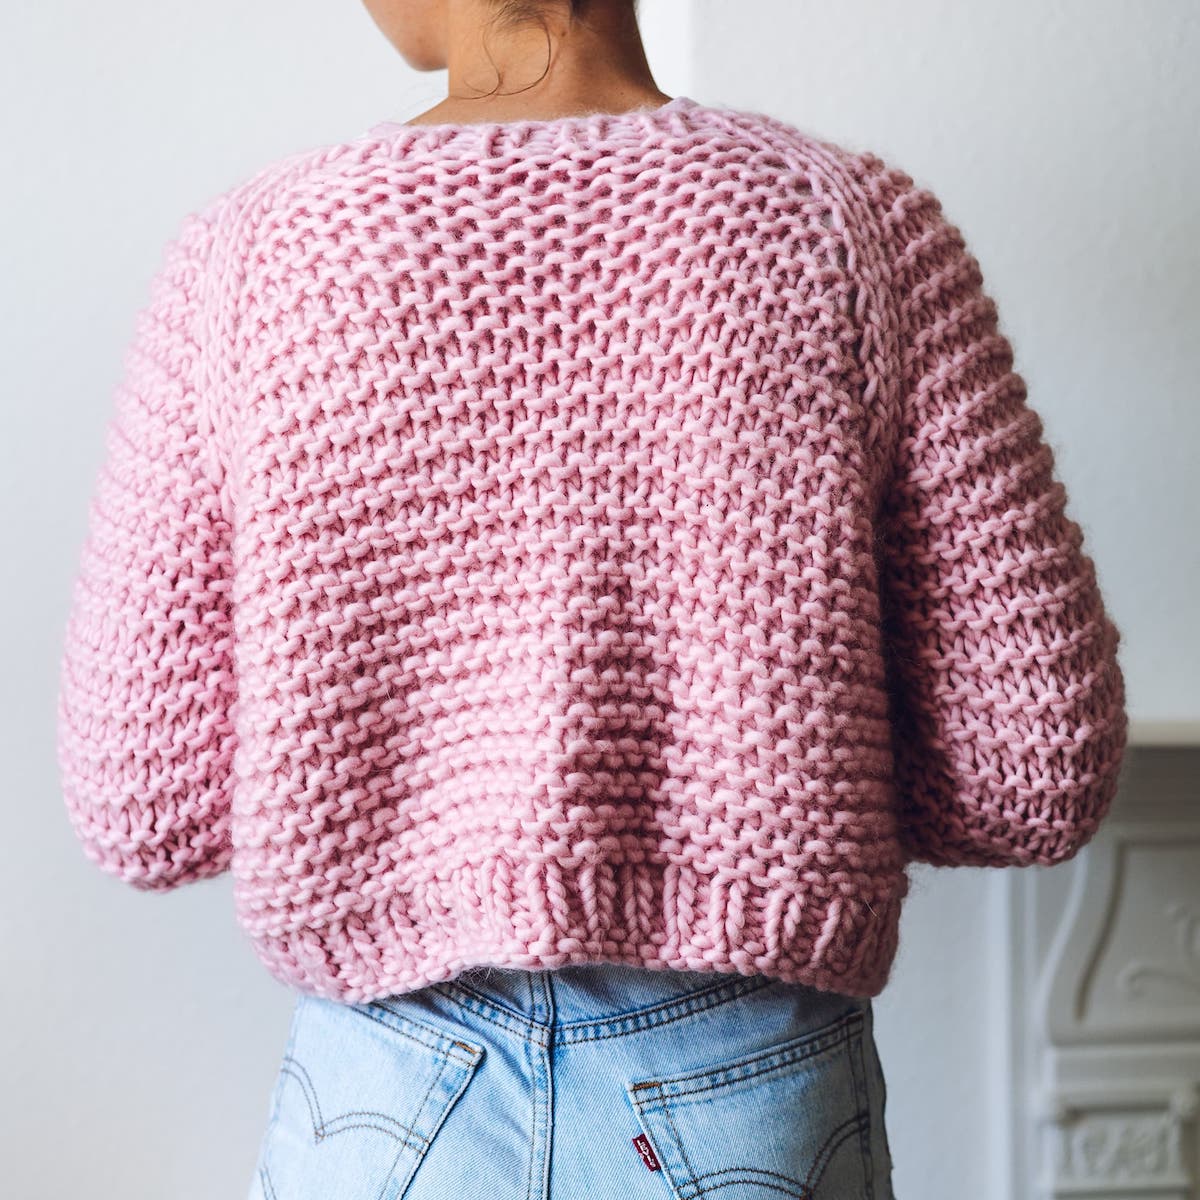 Lauren Aston Designs - Super chunky knitting, yarn & knit kits